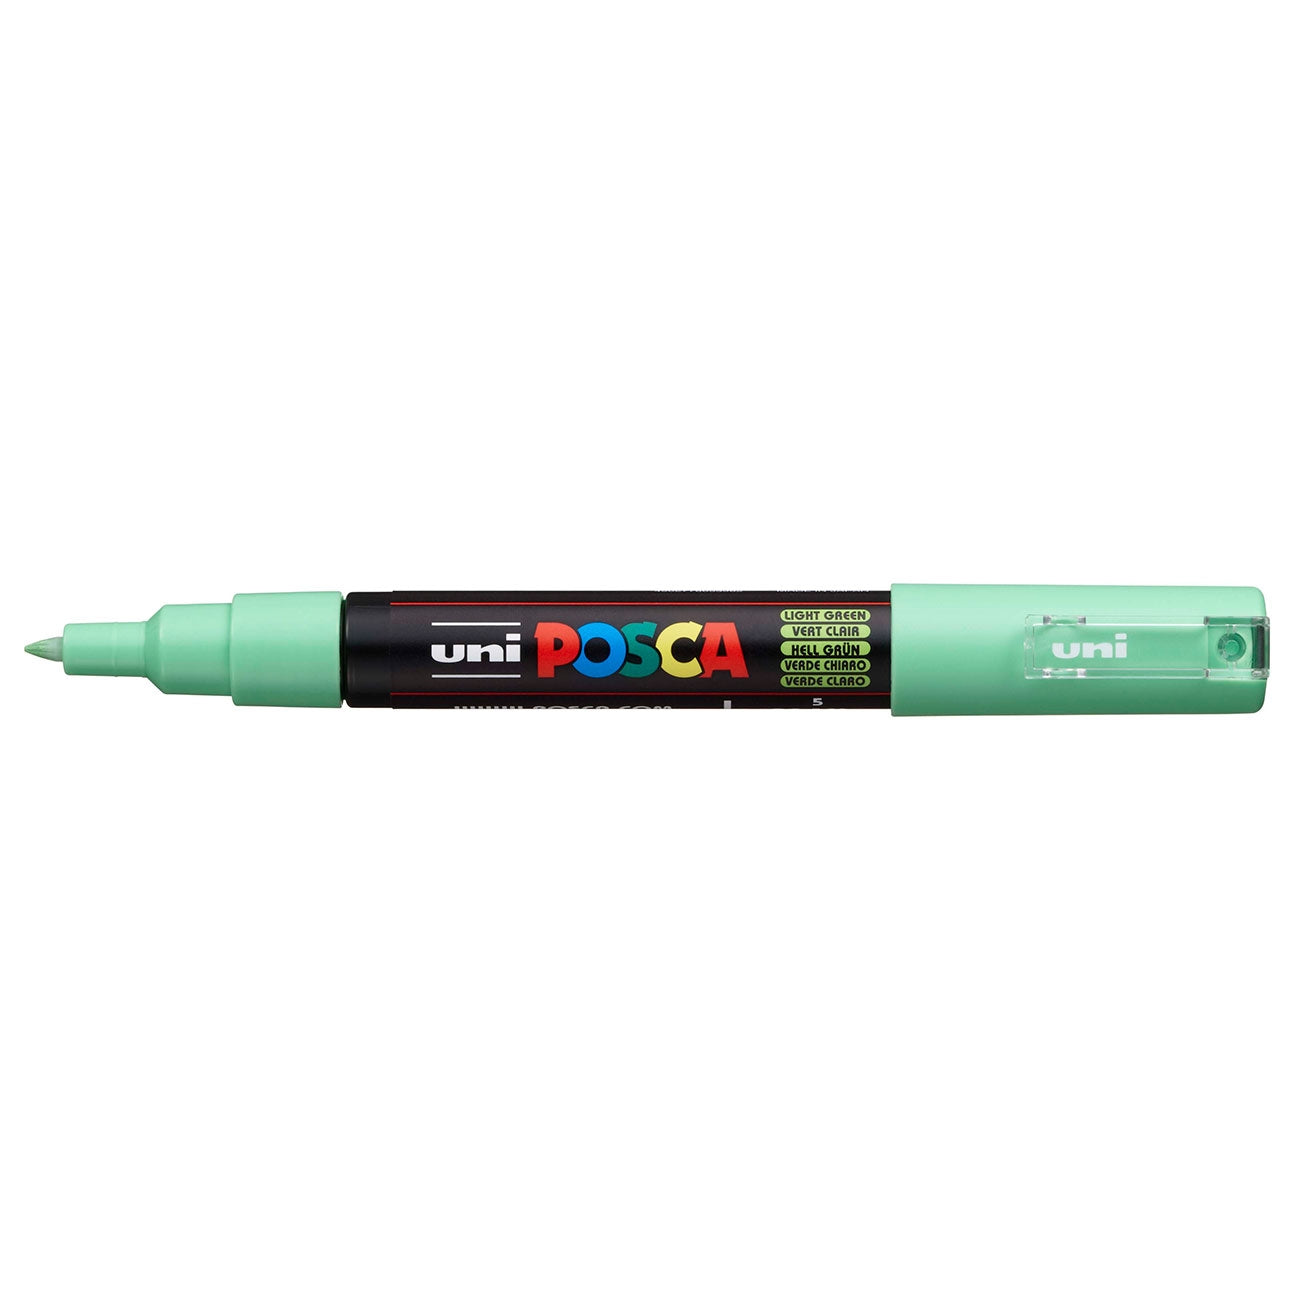 POSCA Acrylic Paint Markers - PC-1M / 0.7mm - Light Green by POSCA - K. A. Artist Shop